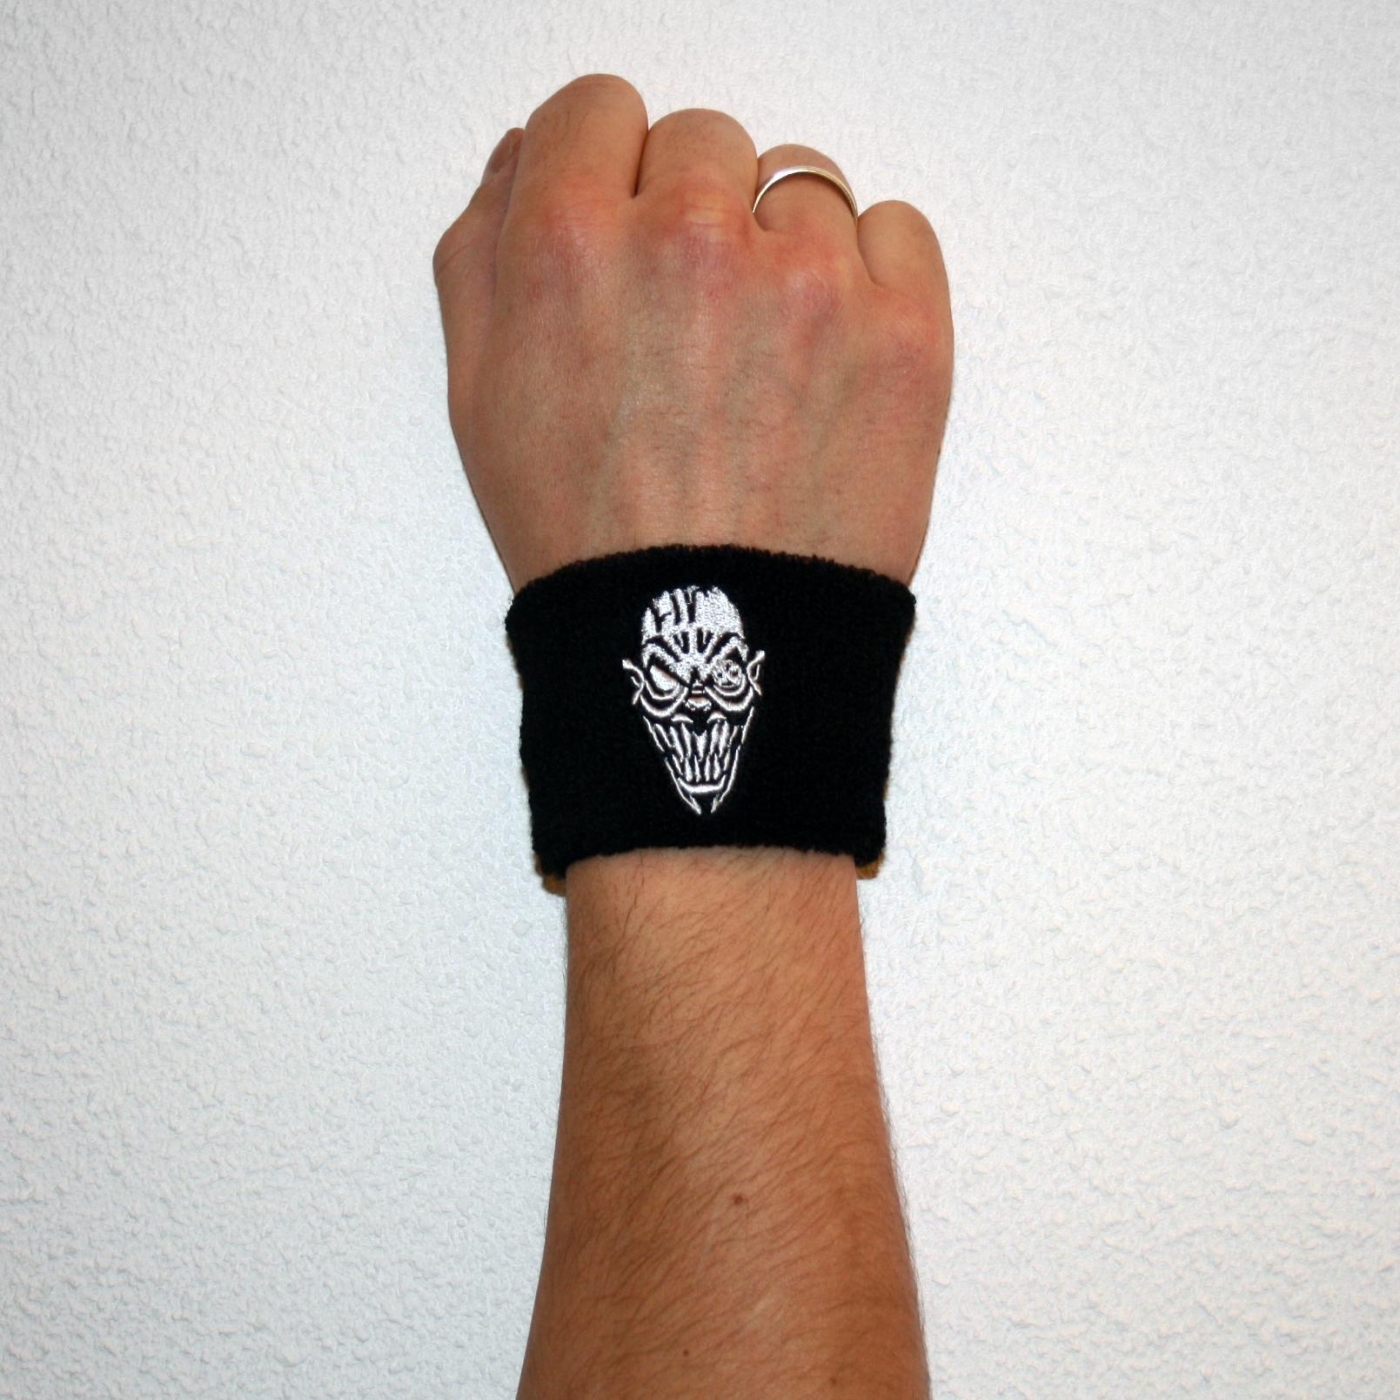 black-csr-wristband-silver-stitched.jpg